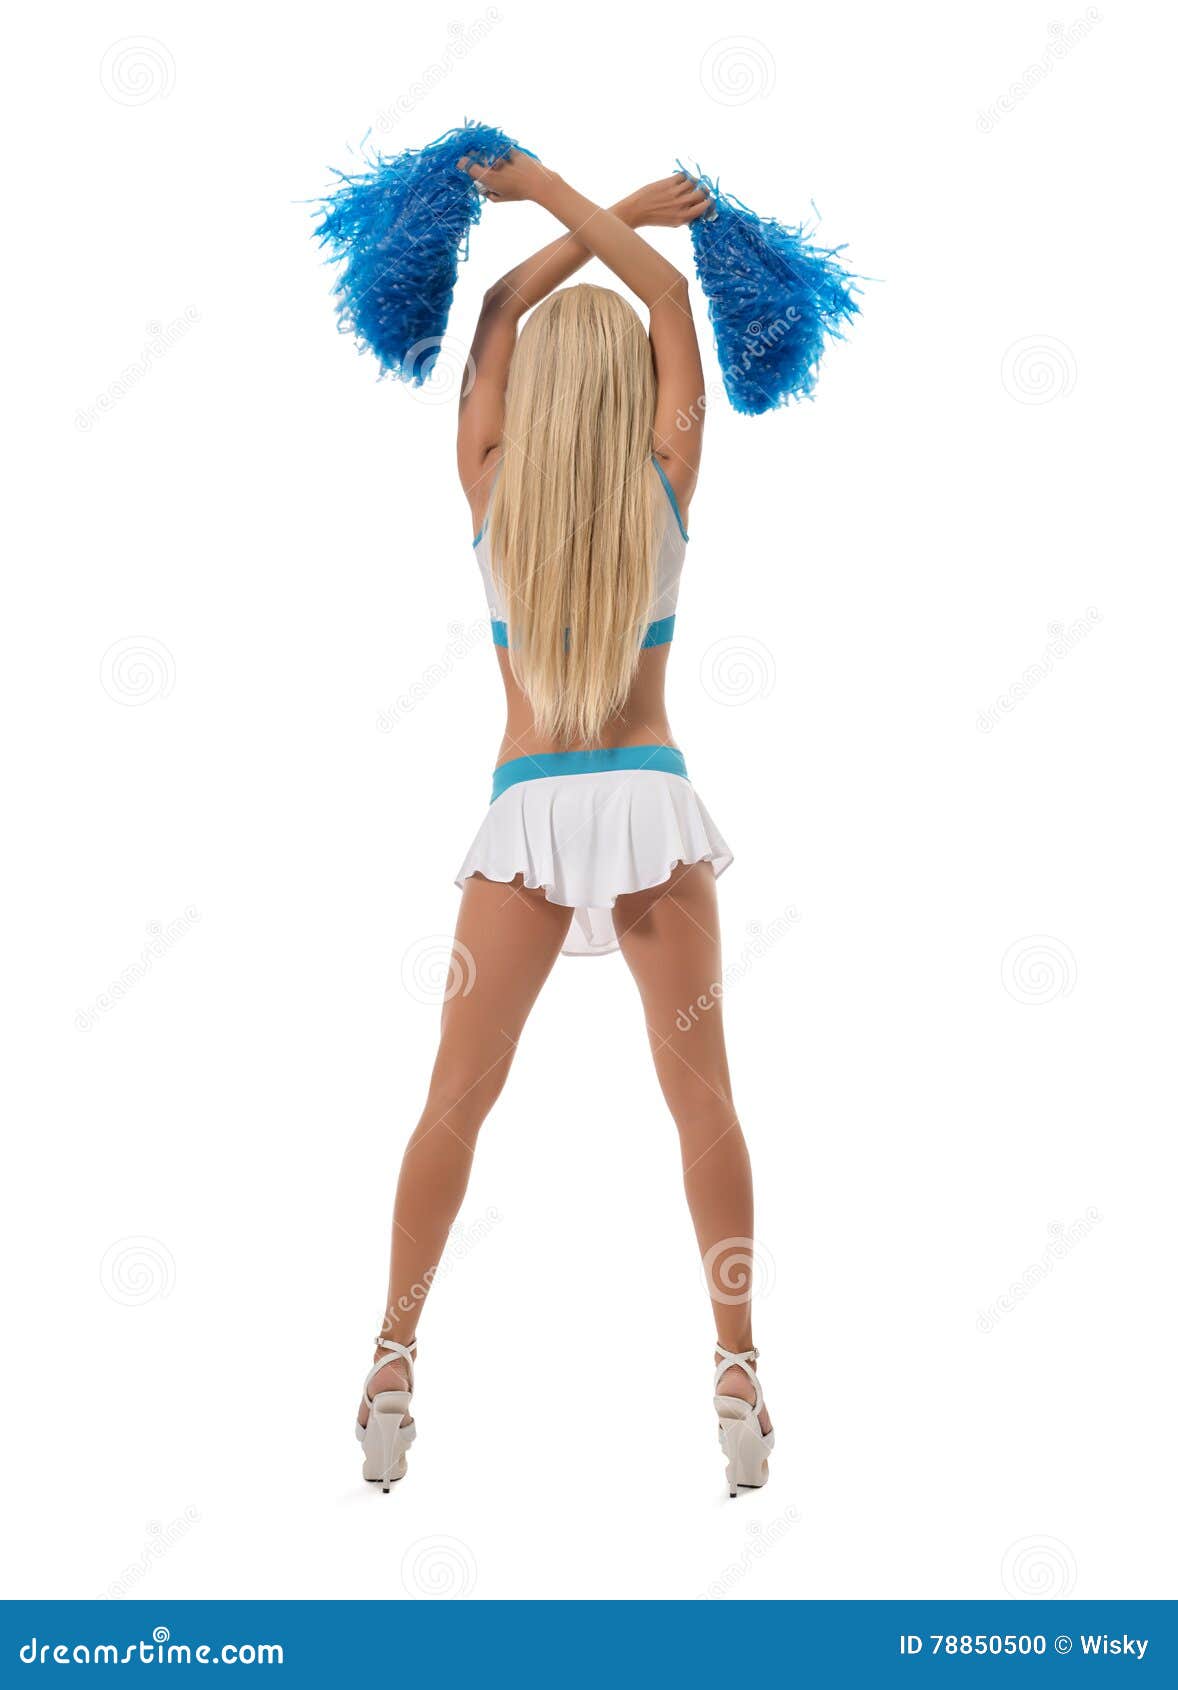 Illustration of a cheerleader with a pompon [set] - Stock Illustration  [97427020] - PIXTA